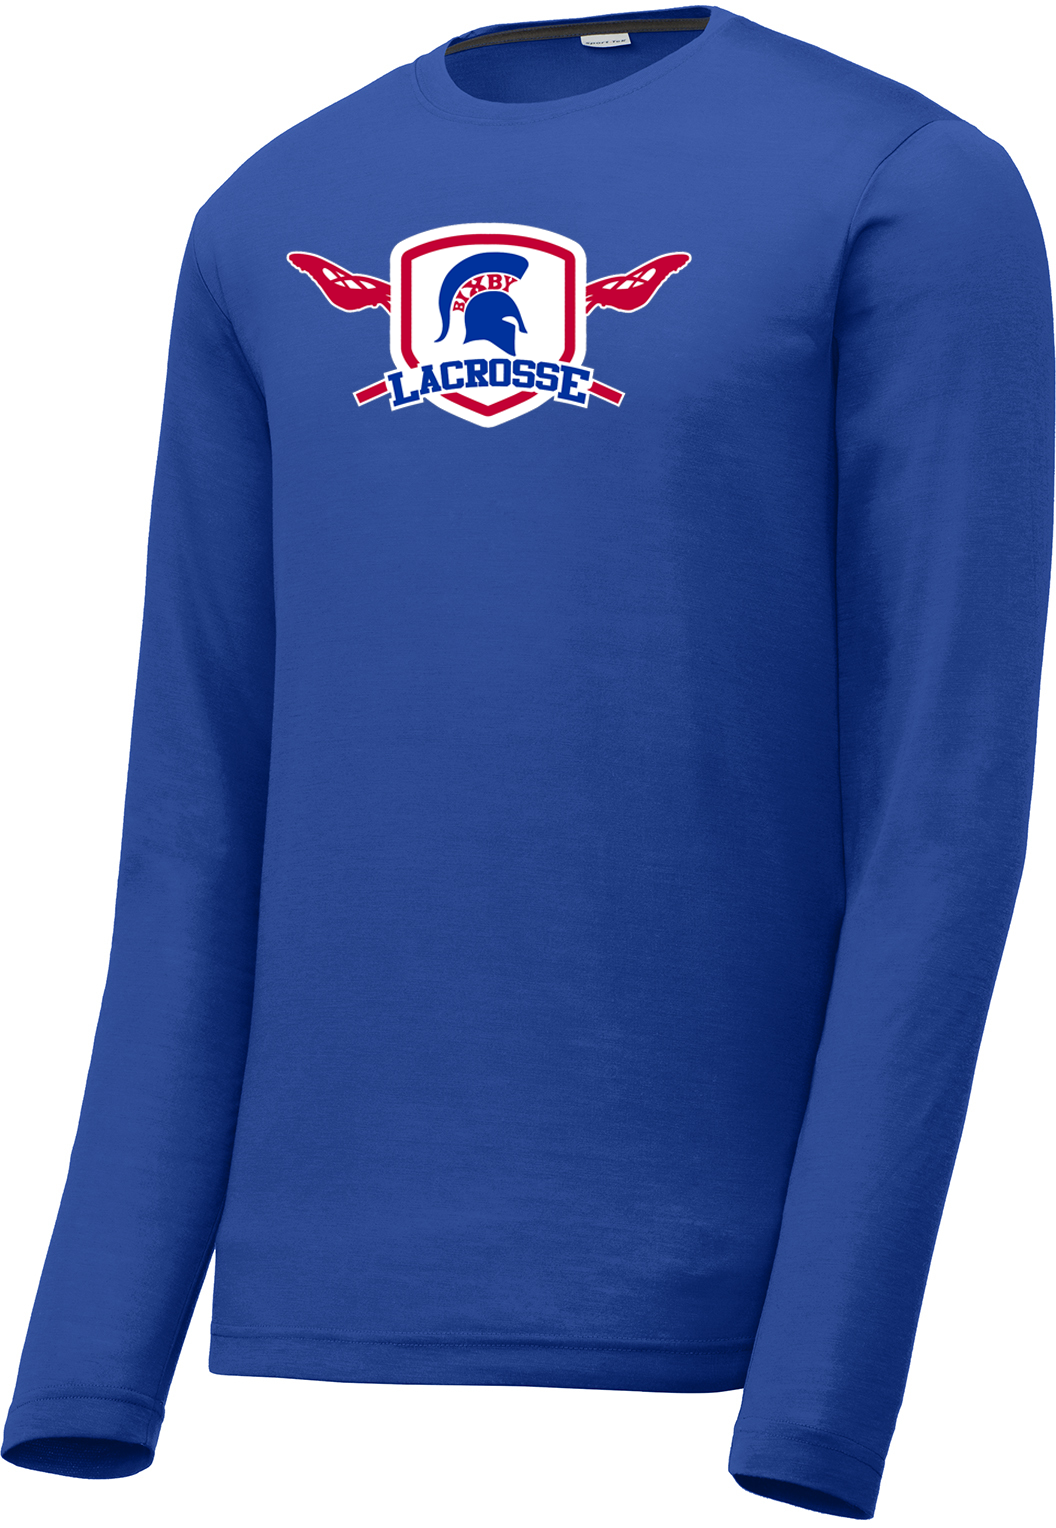 Bixby Lacrosse Royal Blue Long Sleeve CottonTouch Performance Shirt